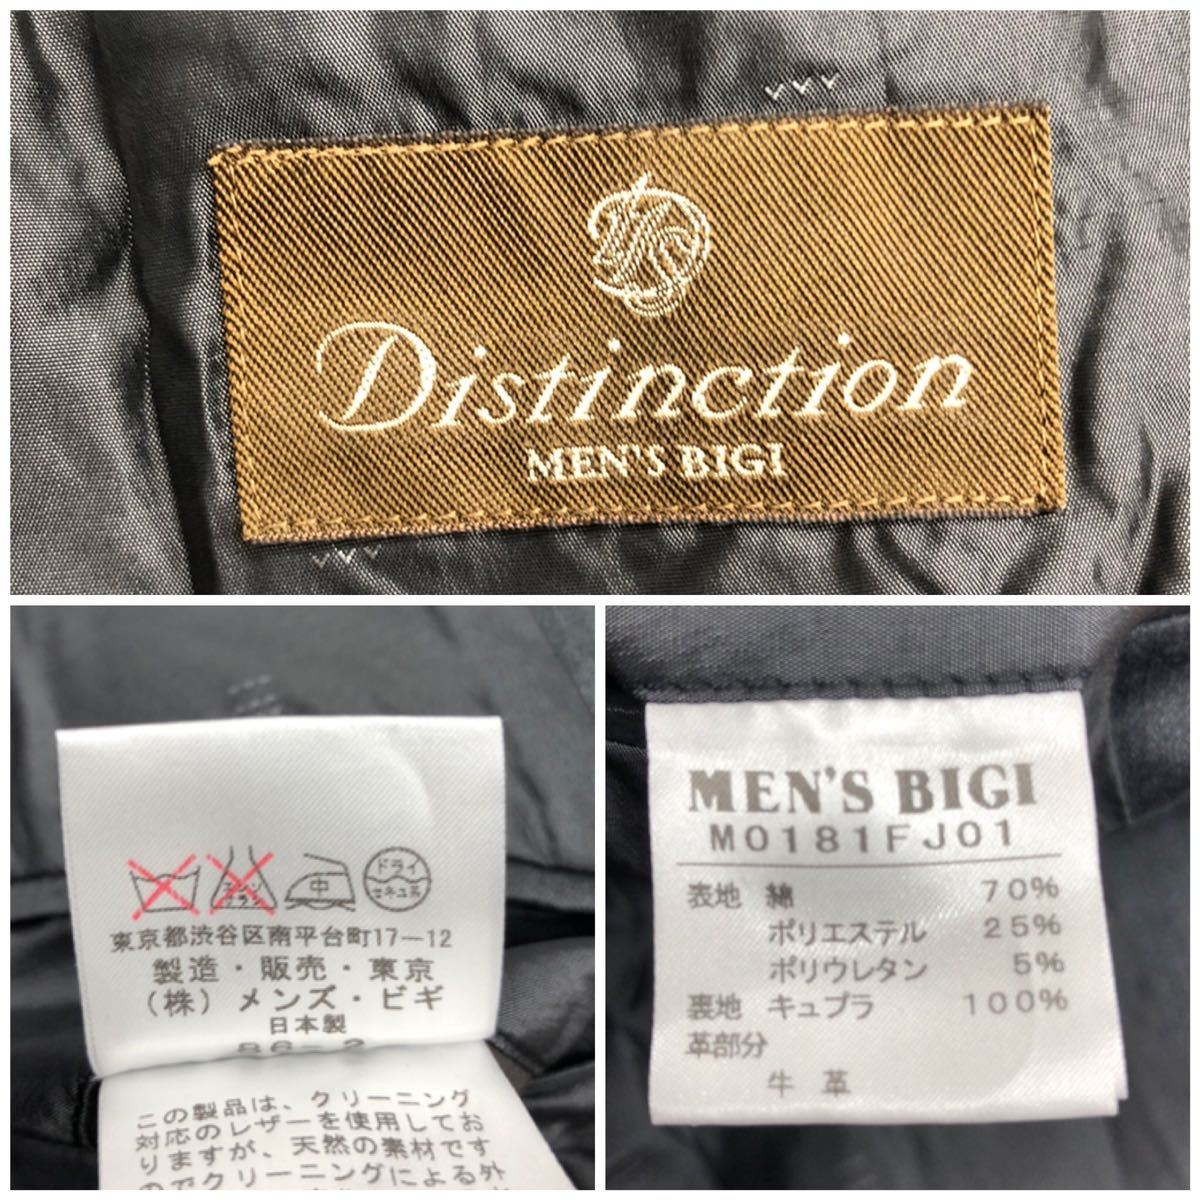 DISTINCTION MEN'S BIGIディスティンクション メンズビギ てテーラードジャケット 背抜き 3ボタン ダークグレー 01サイズ S-M相当 紳士_画像10